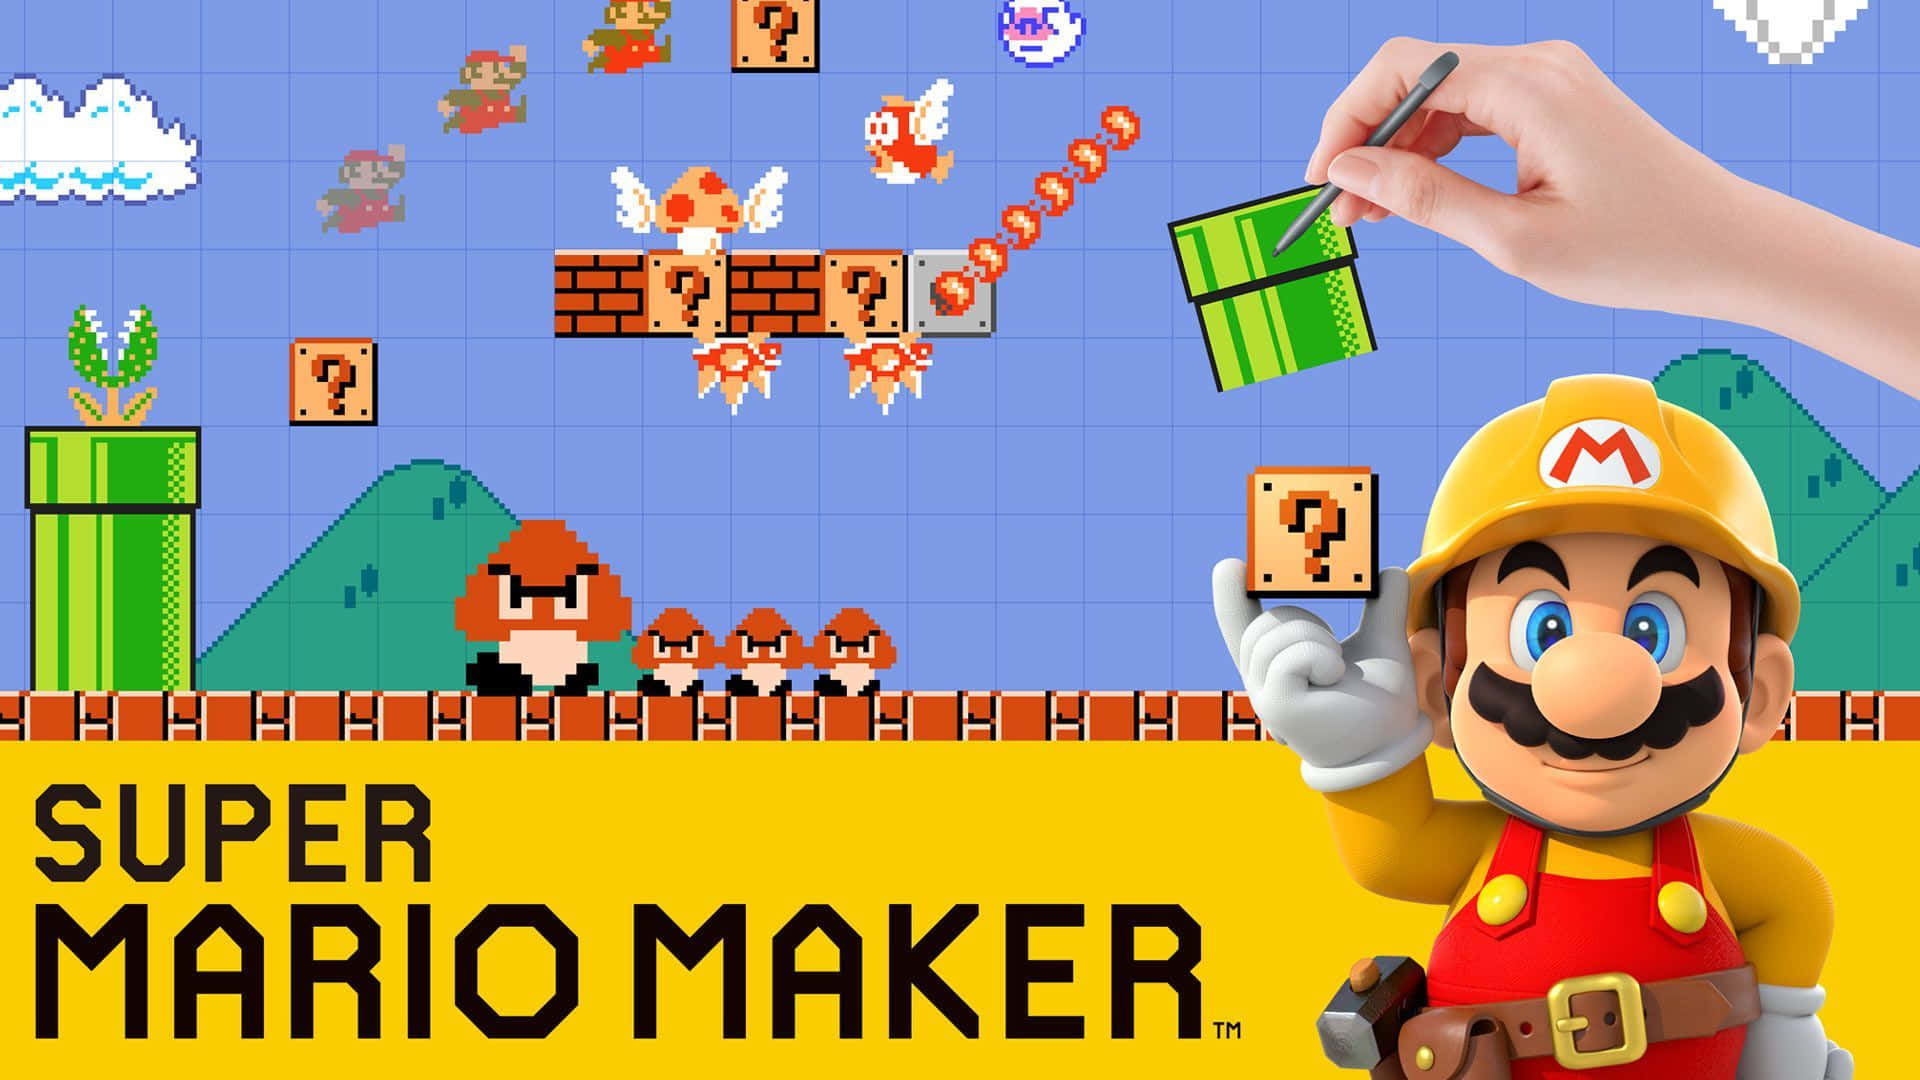 Super Mario Maker Wallpaper - High Resolution Game Scene with Mario and Friends Wallpaper